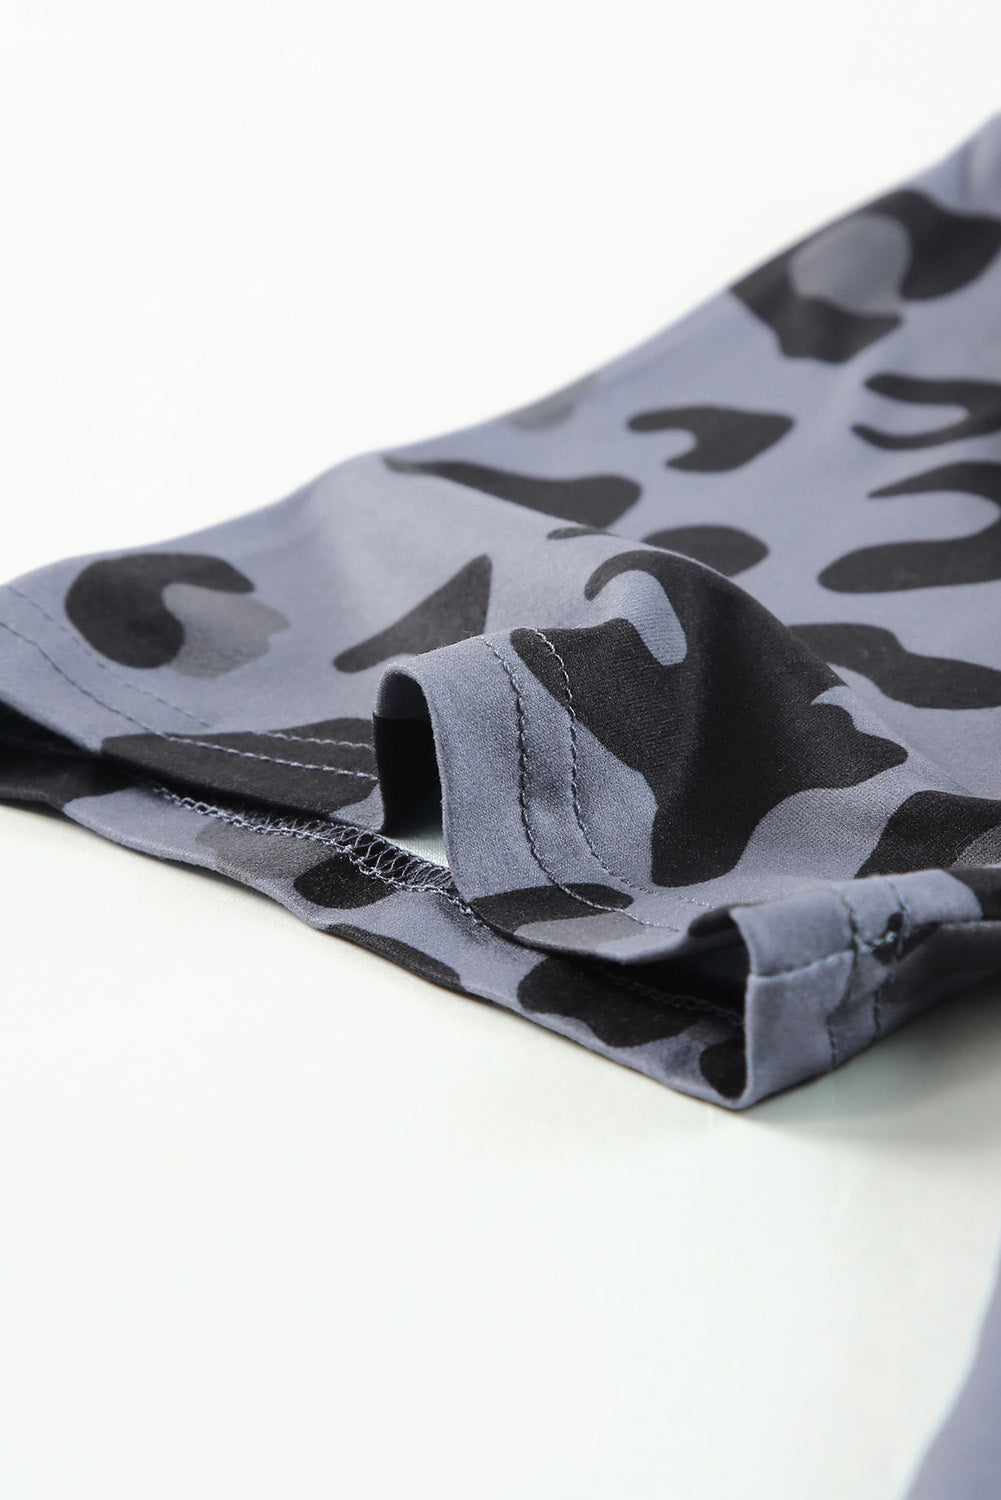 Gray Tie Dye Leopard Patchwork Short Sleeve Top